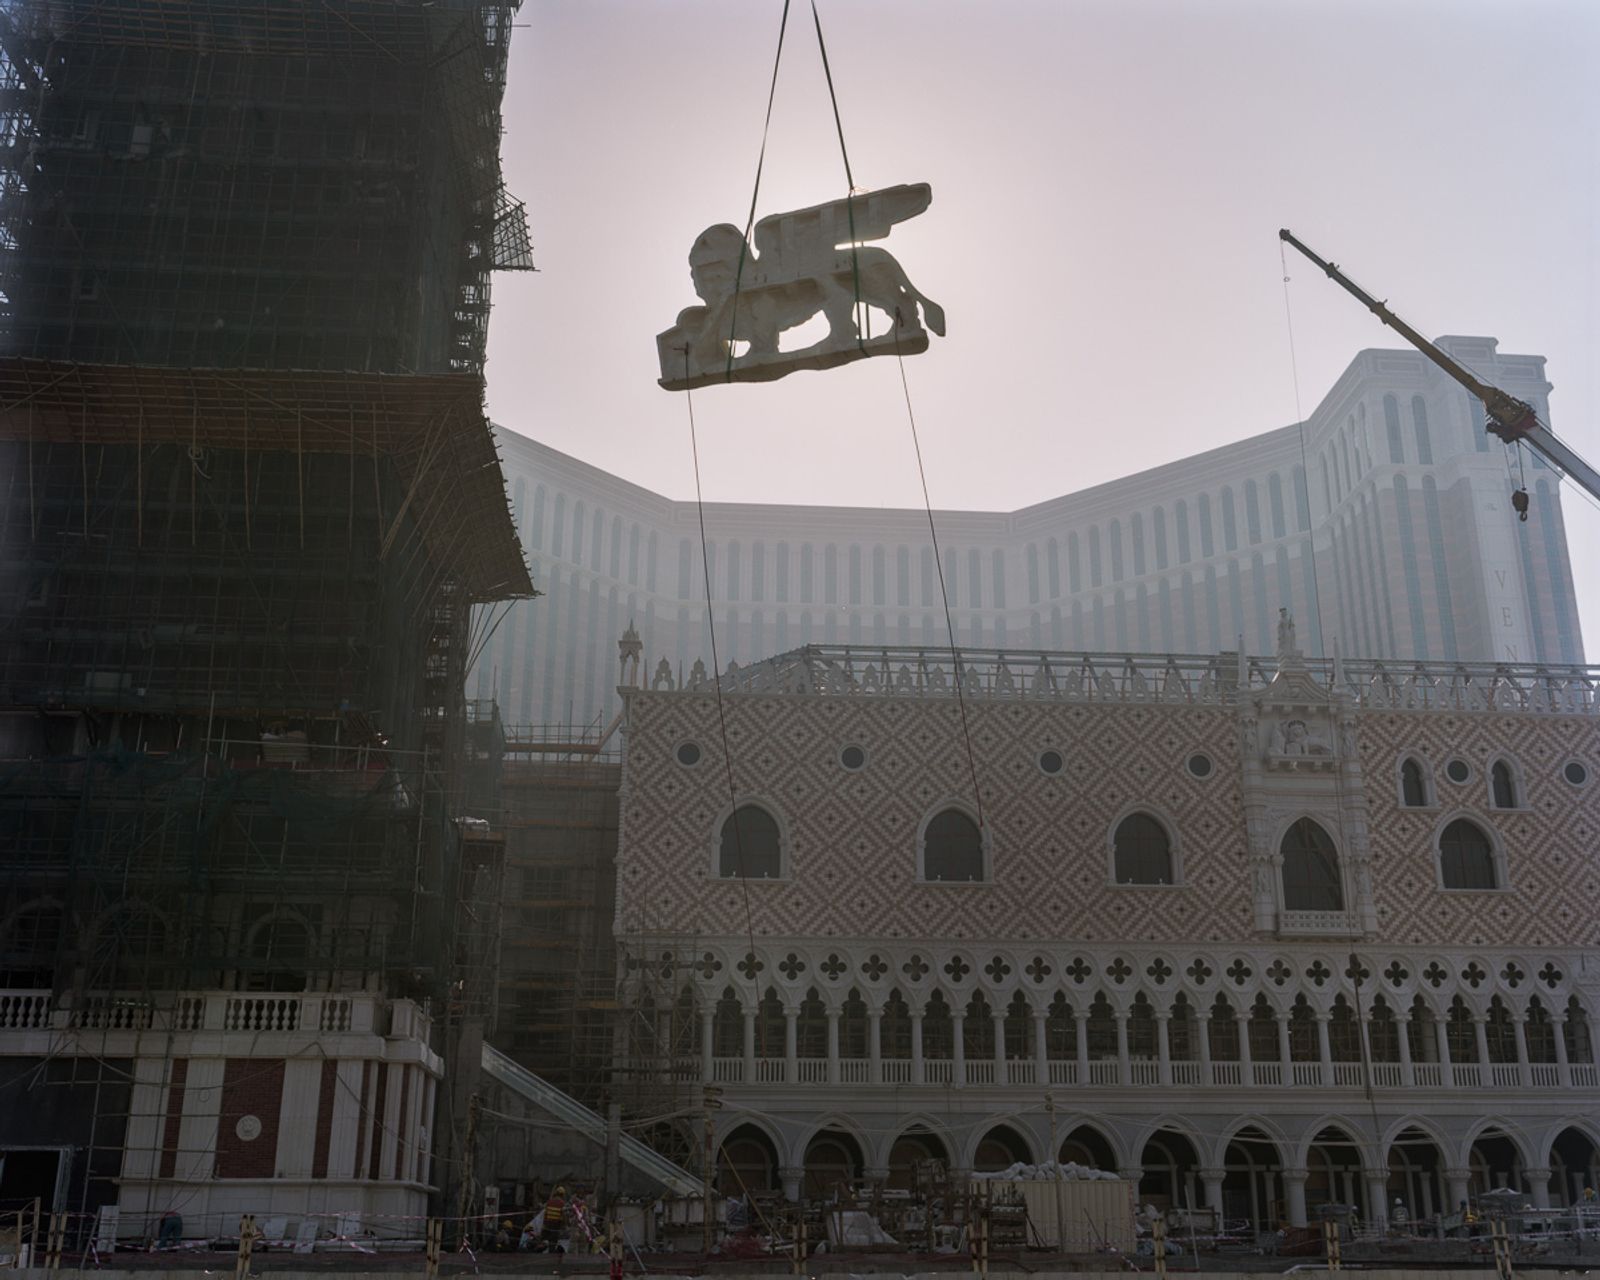 © Adam Lampton - The Venetian Lion, Macao (Img#: 3) Archival Inkjet Print (2007/19)